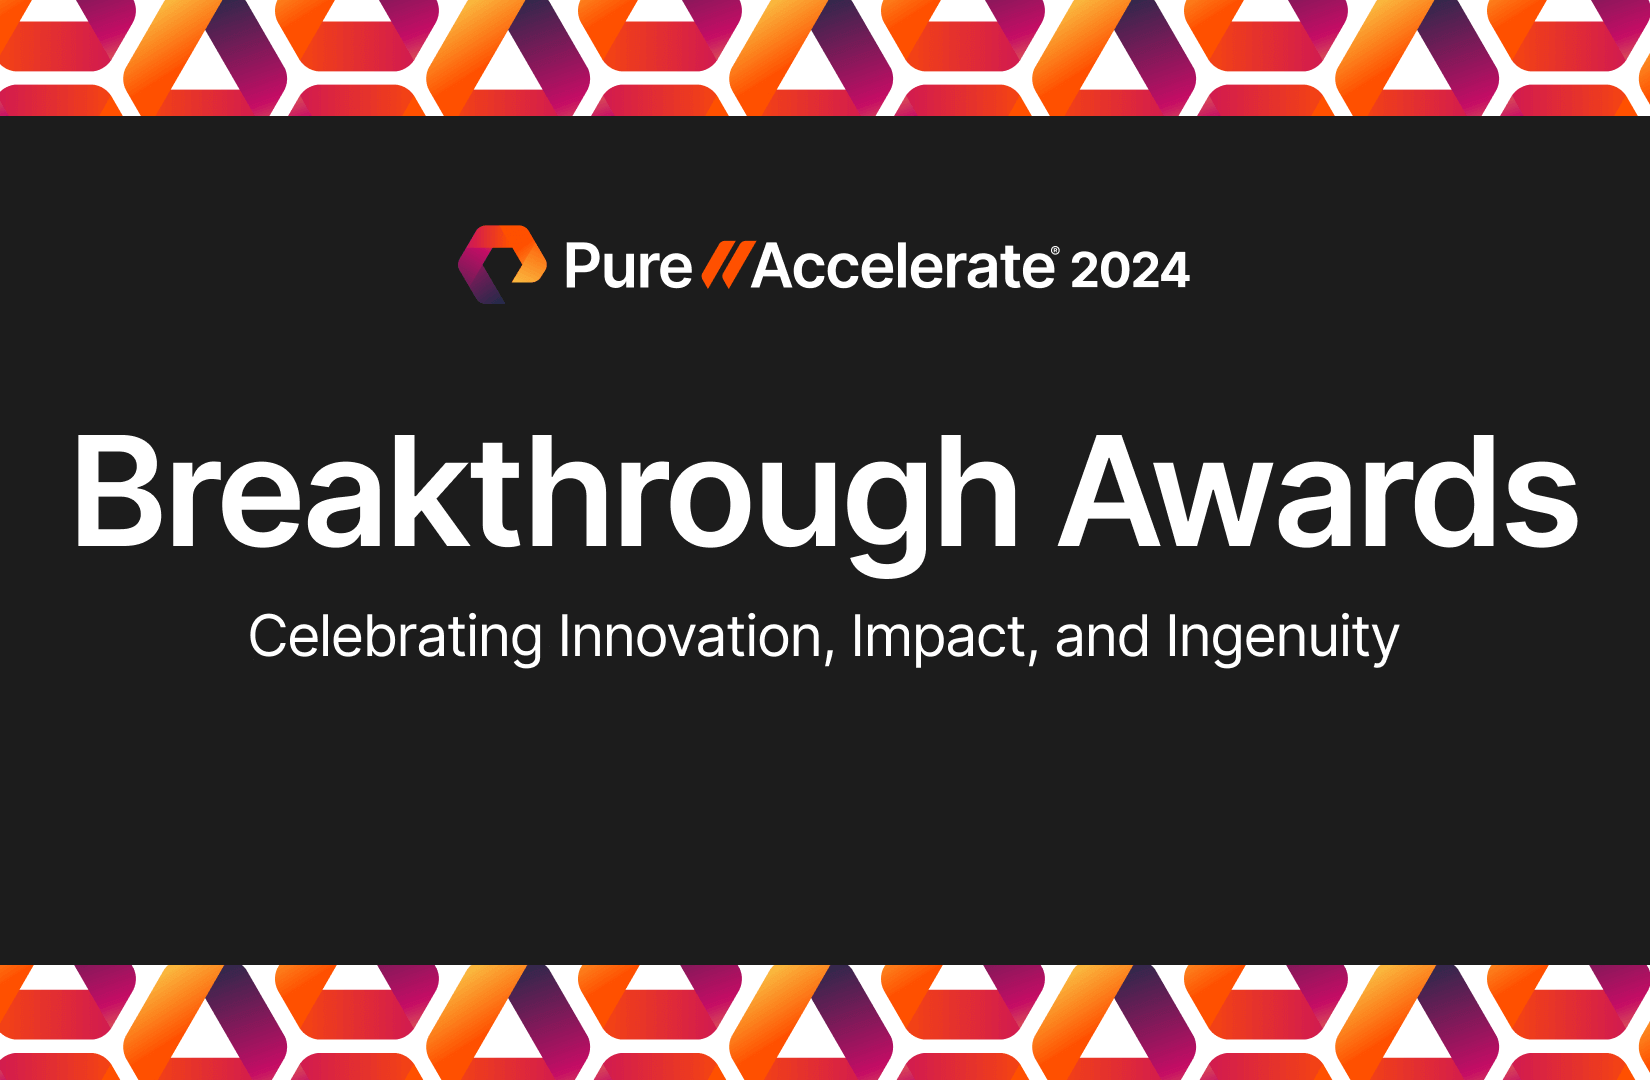 Breakthrough Awards